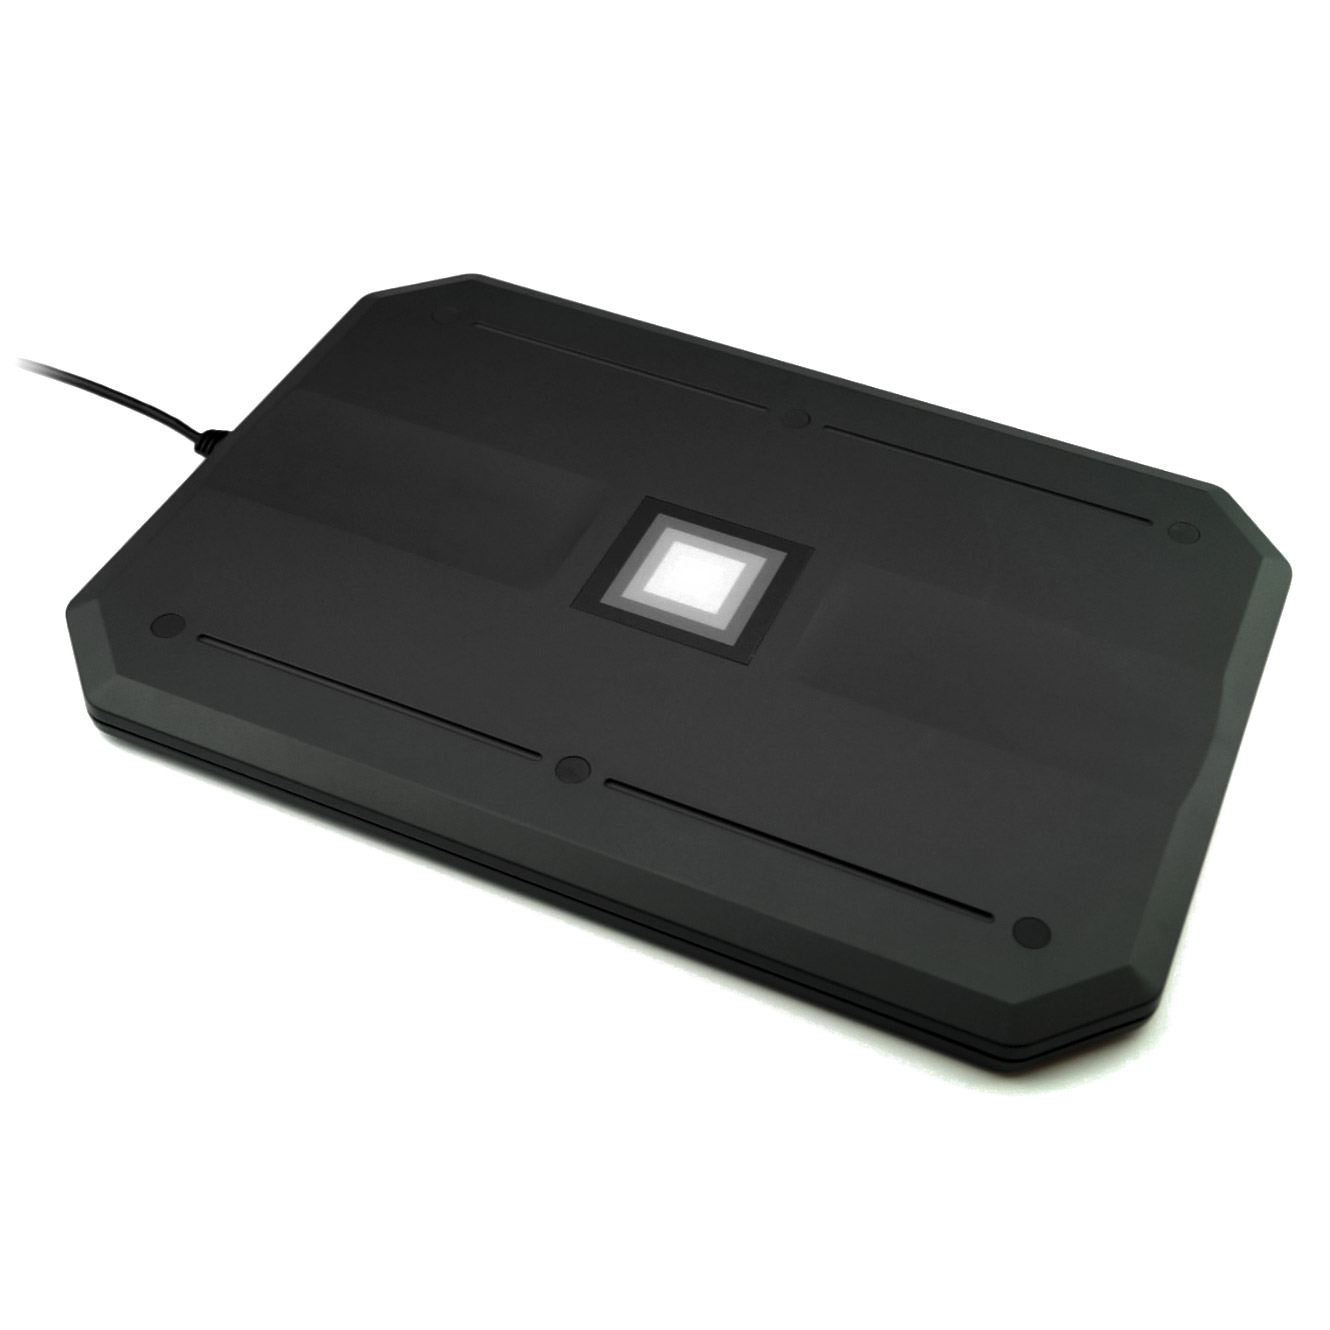 UHF Tray / Desktop Reader - AMP800 - Tray style UHF Desktop RFID reader